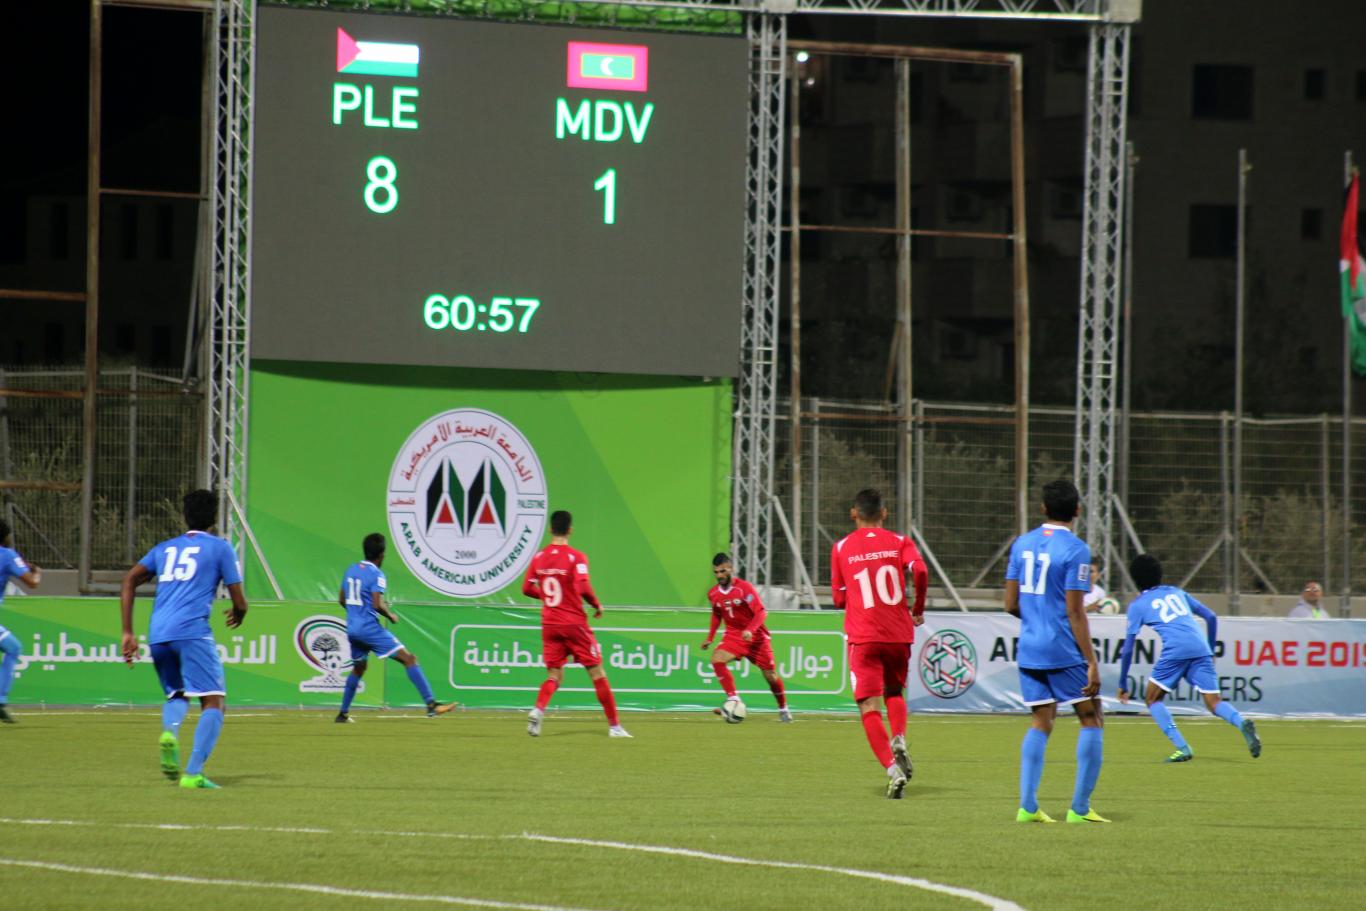 PALESTINE NATIONAL FOOTBALL TEAM AND MALDIVIAN TEAM MATCH AT THE ARAB AMERICAN UNIVERSITY INTERNATIONAL STADIUM